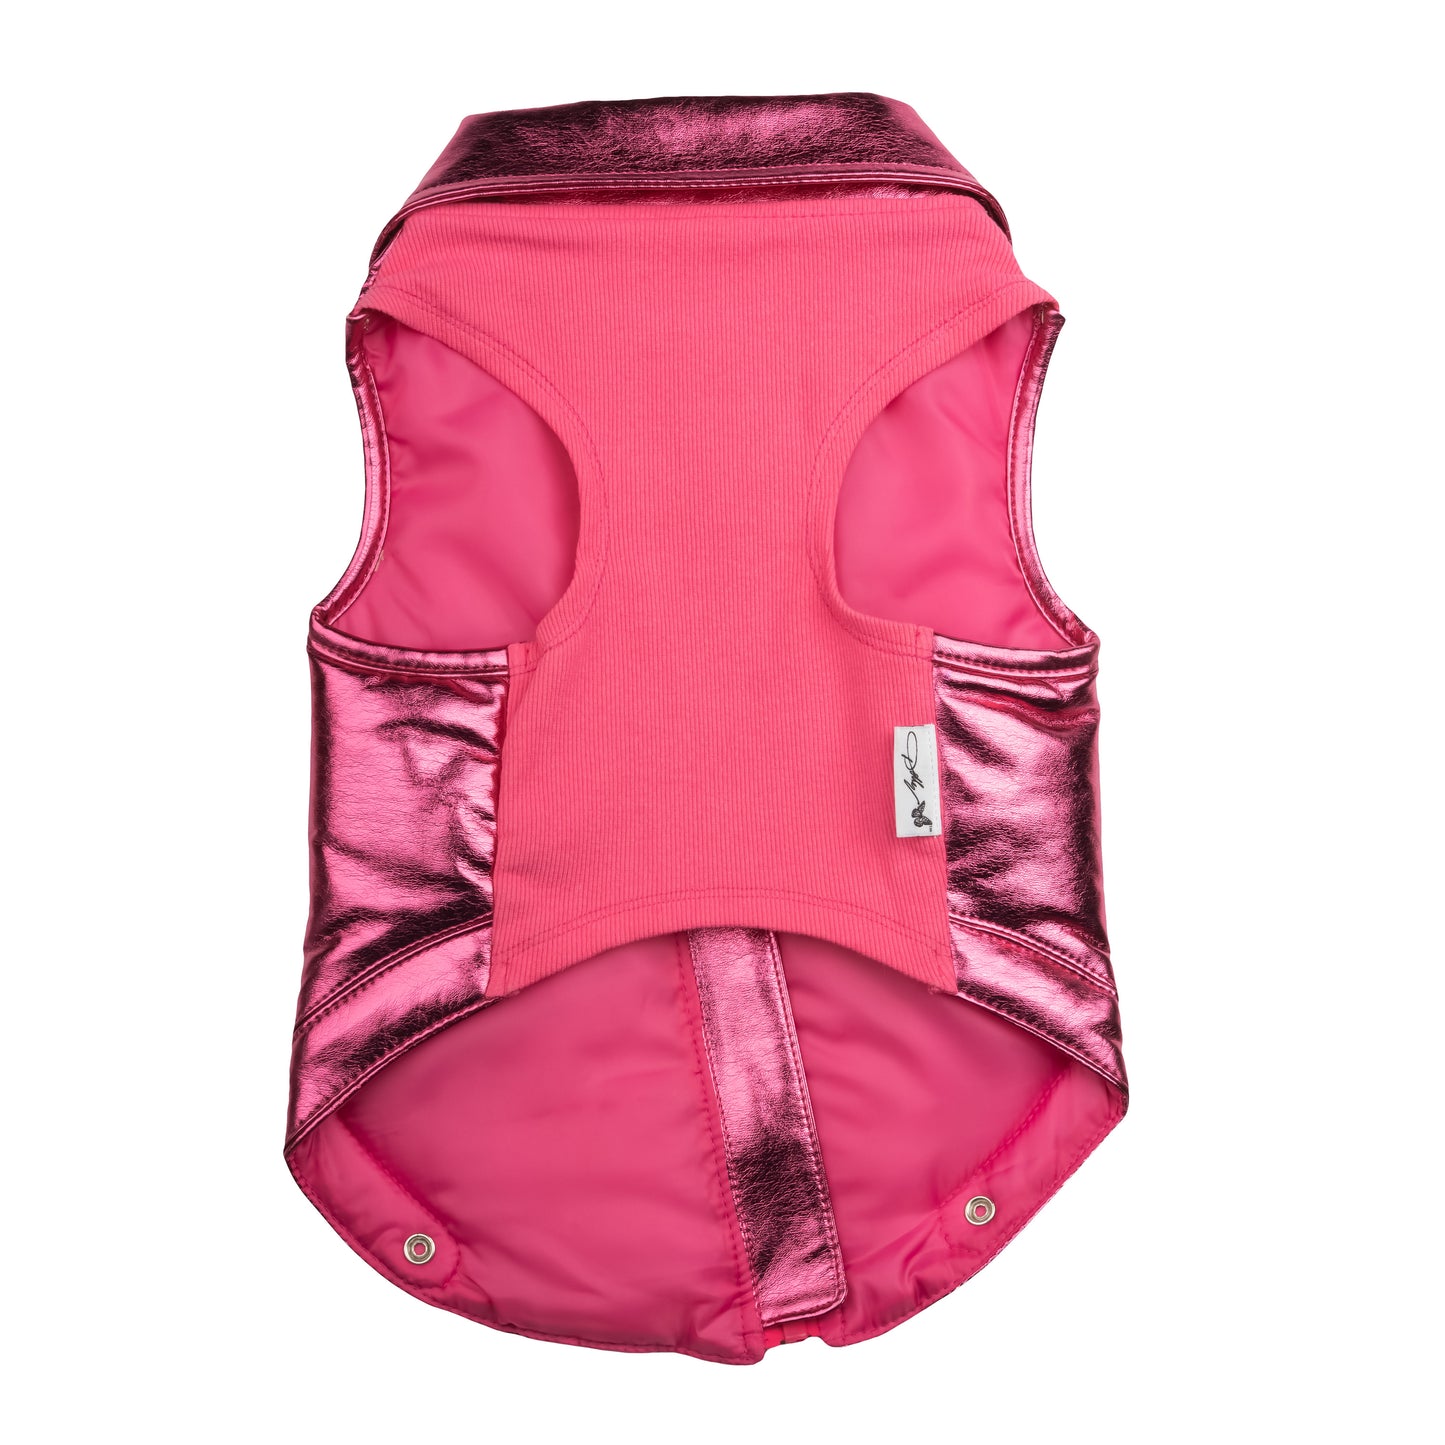 Dolly Rhinestone Moto Pet Jacket - Pink